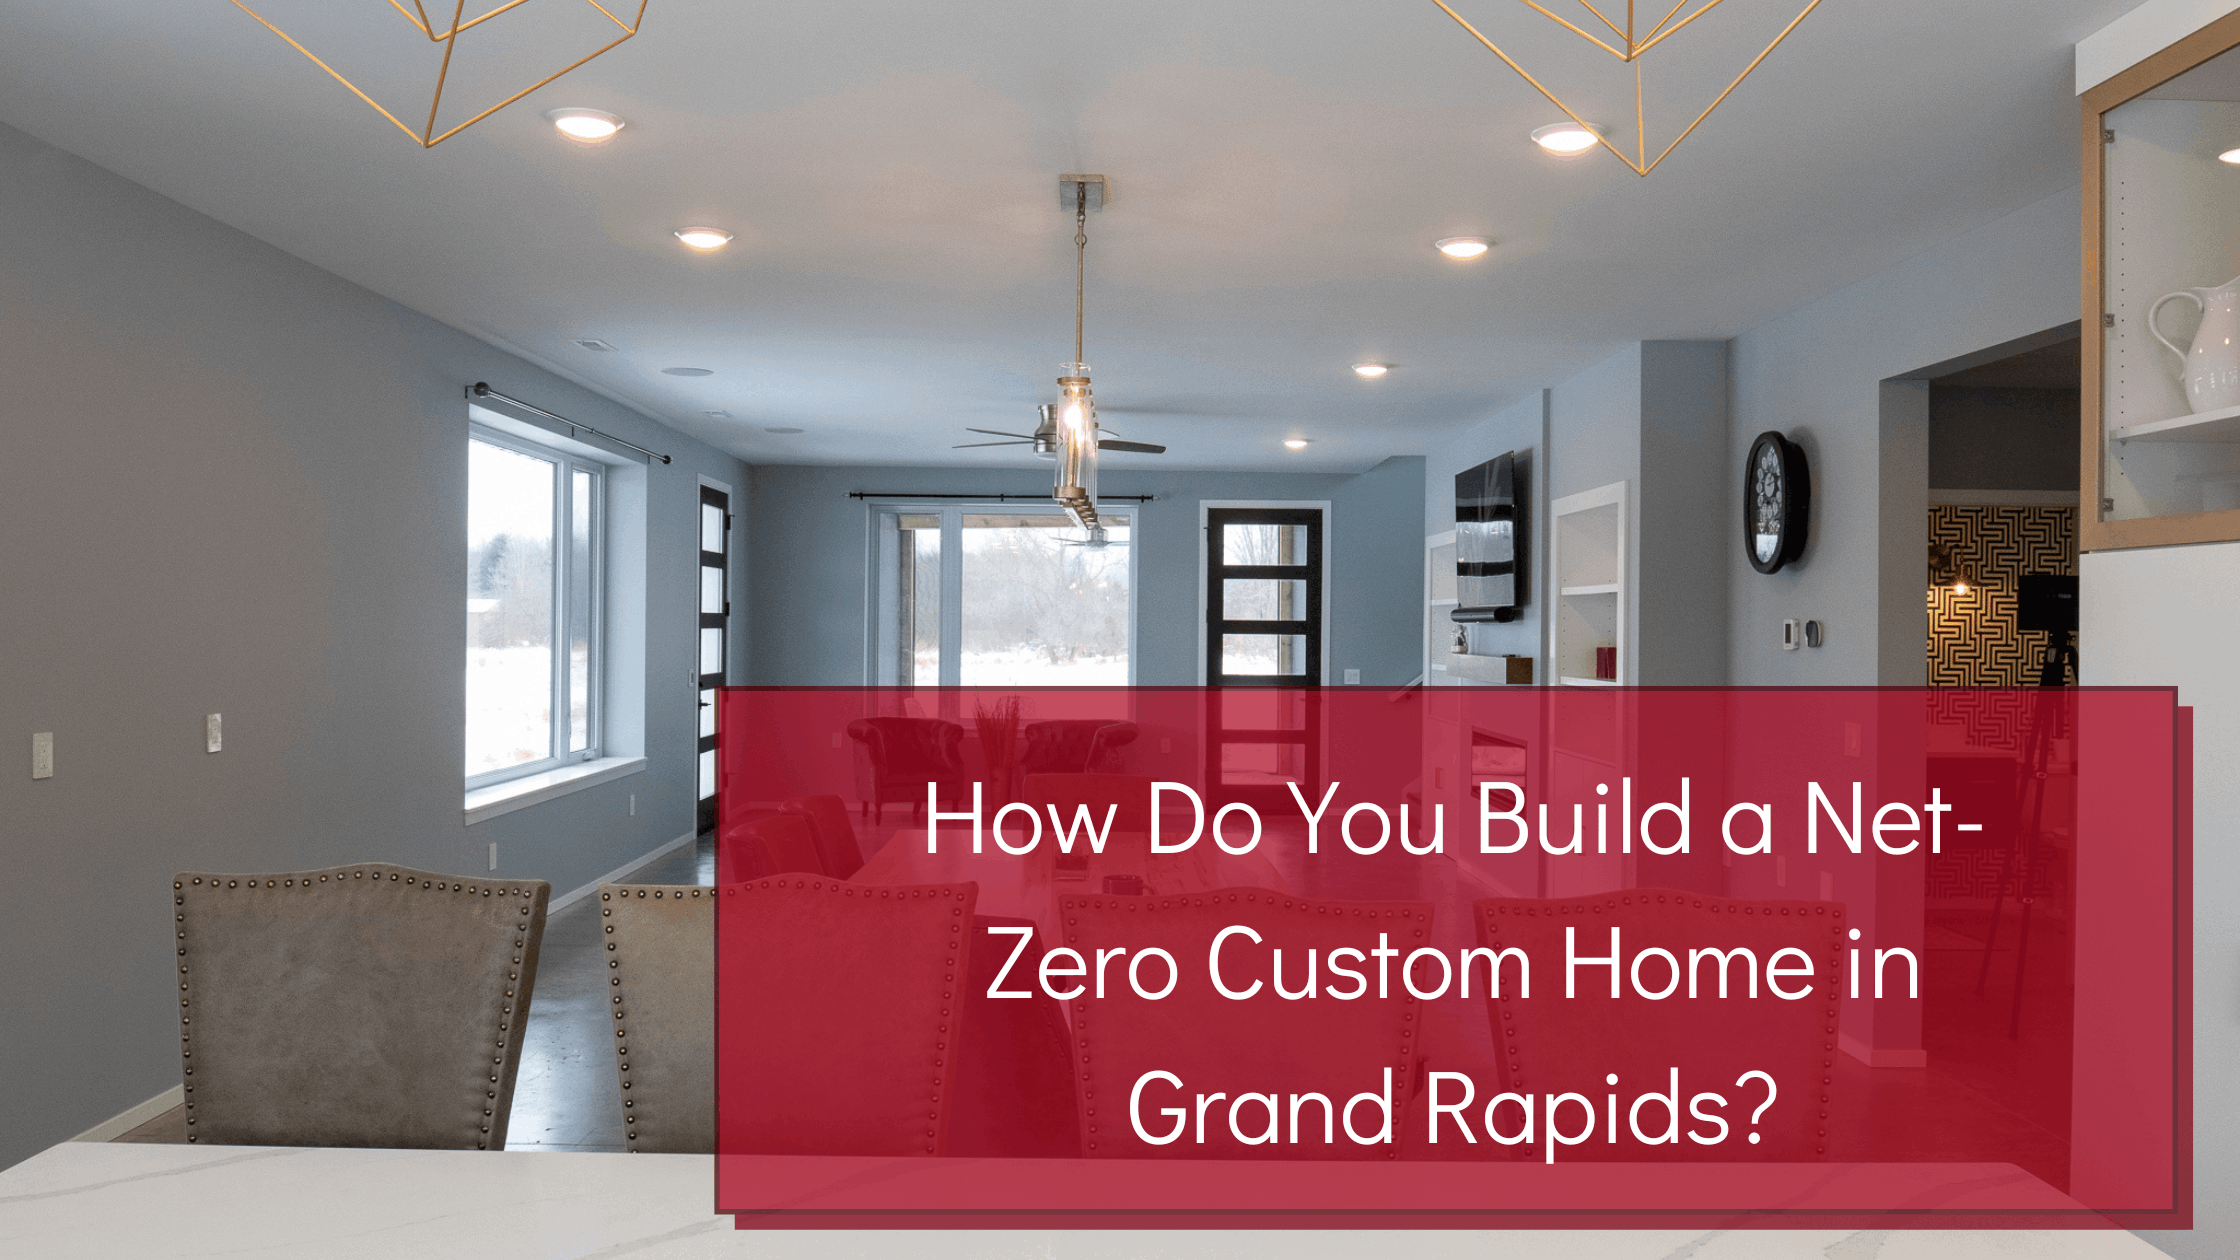 How Do You Build a Net-Zero Custom Home in Grand Rapids?